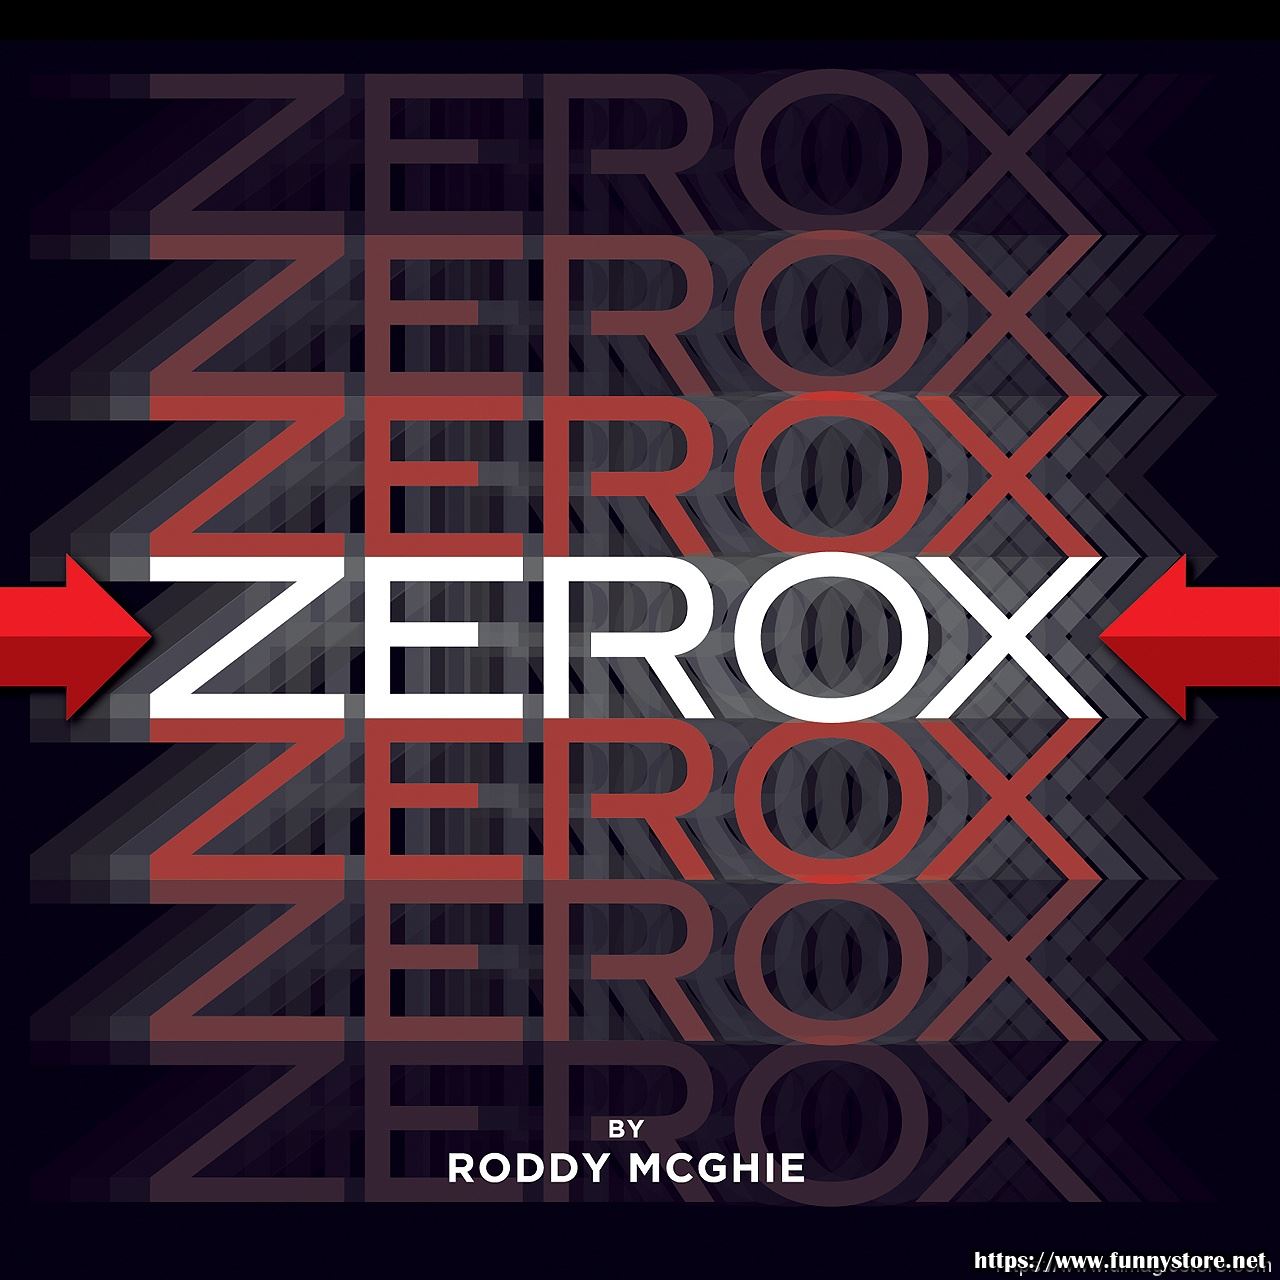 Roddy McGhie - Zerox